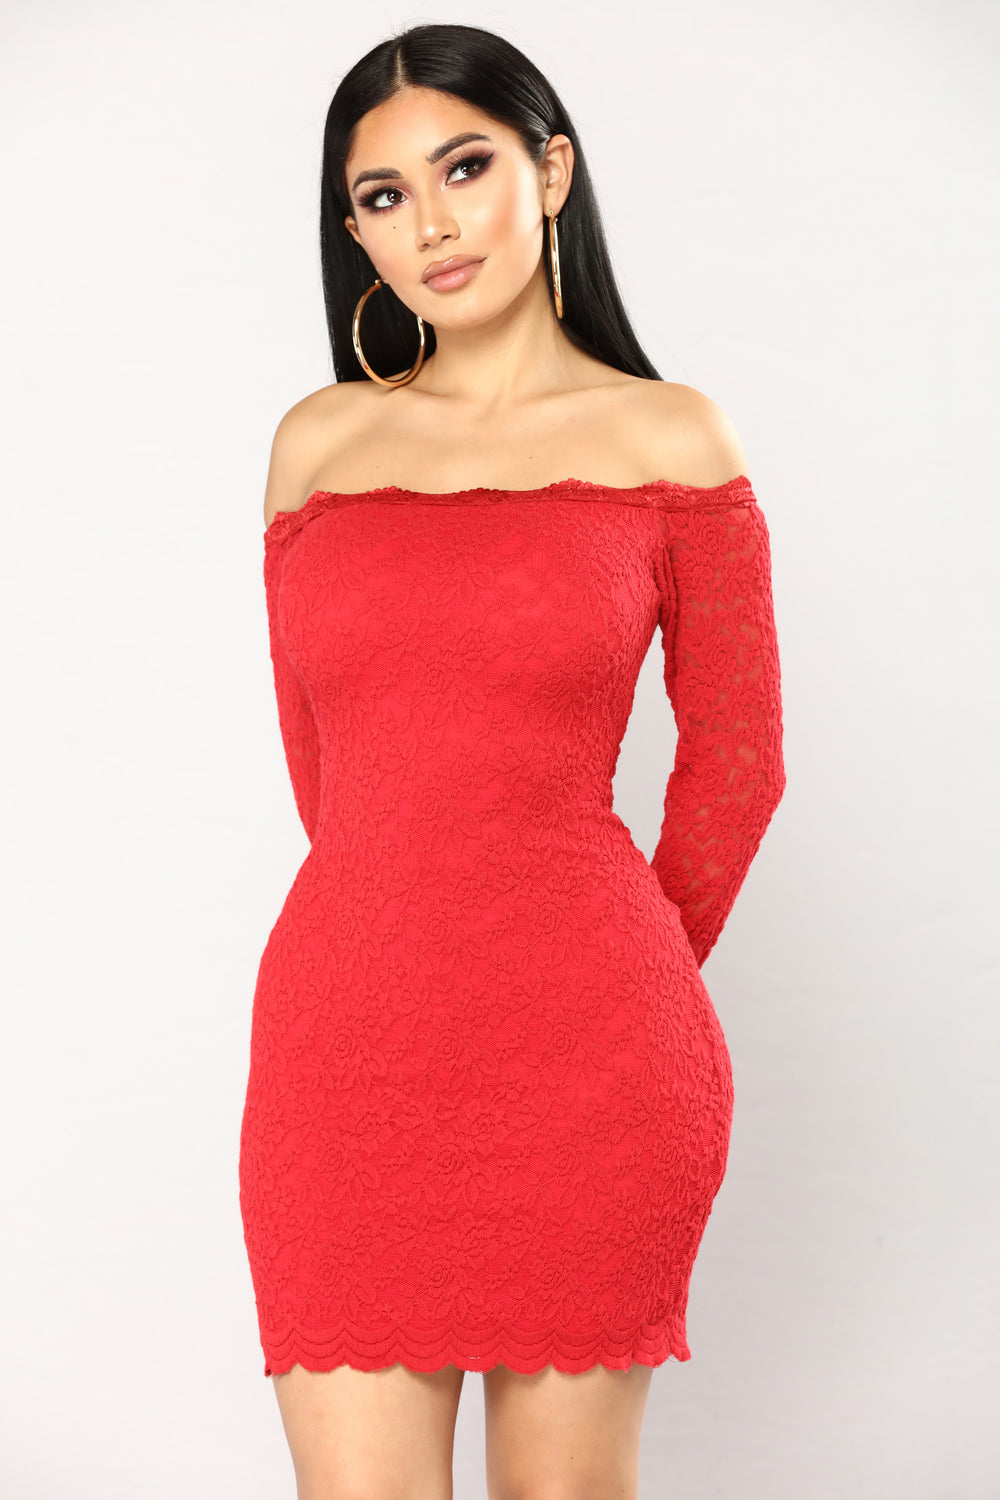 And red bodycon dress fashion nova online wholesale, Champion t shirt original price, nike t shirt heren sale. 